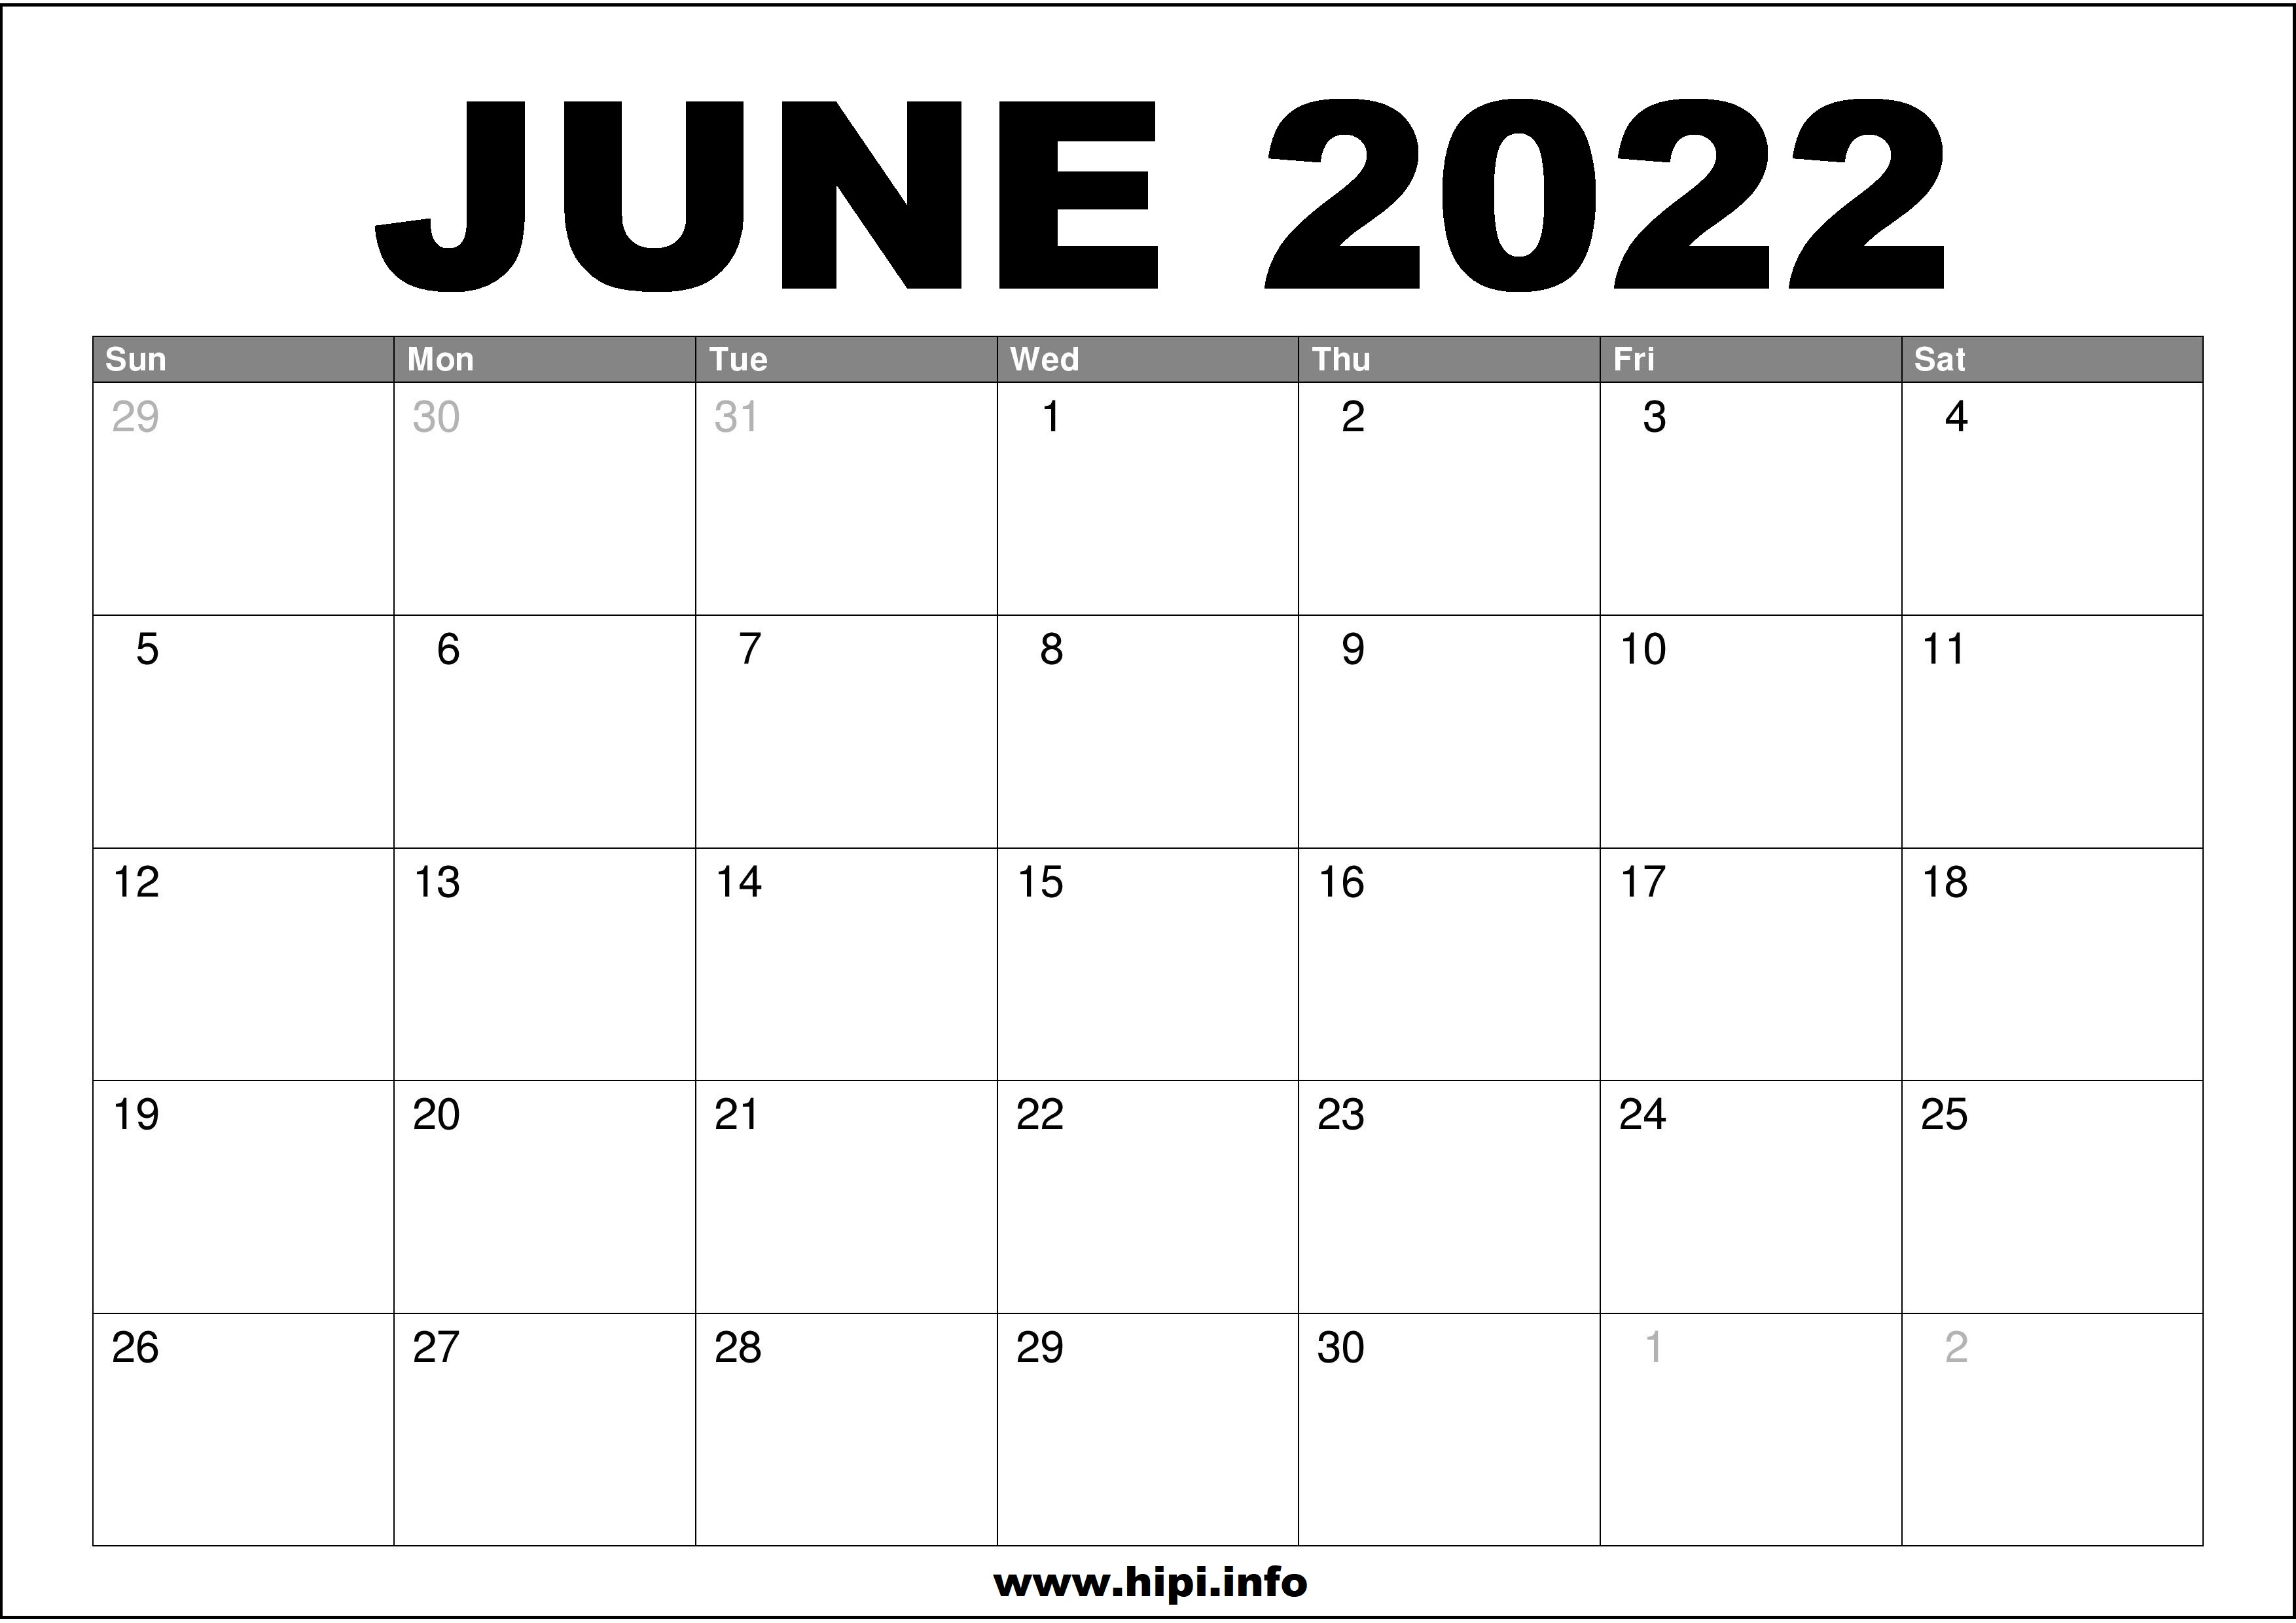 June 2022 Calendar Printable Free Hipi Info Calendars Printable Free